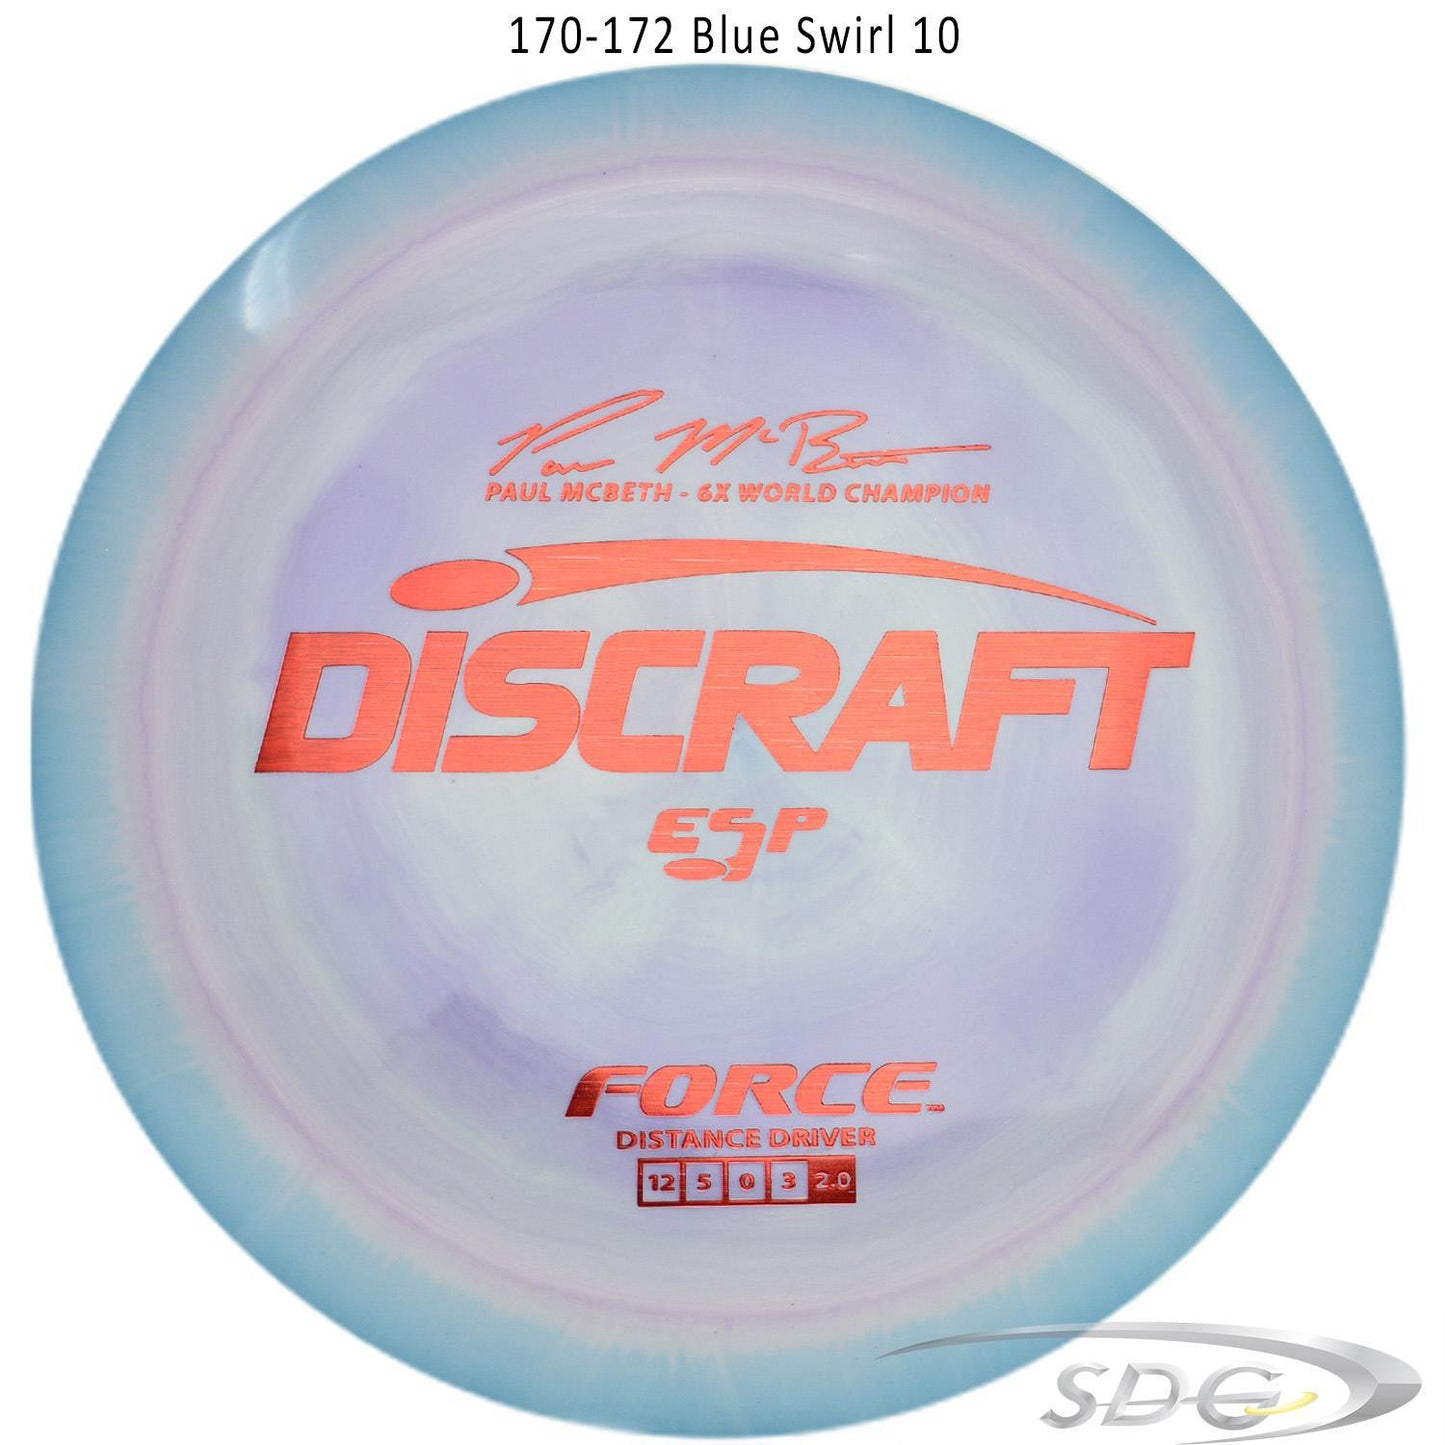 discraft-esp-force-6x-paul-mcbeth-signature-disc-golf-distance-driver 170-172 Blue Swirl 10 